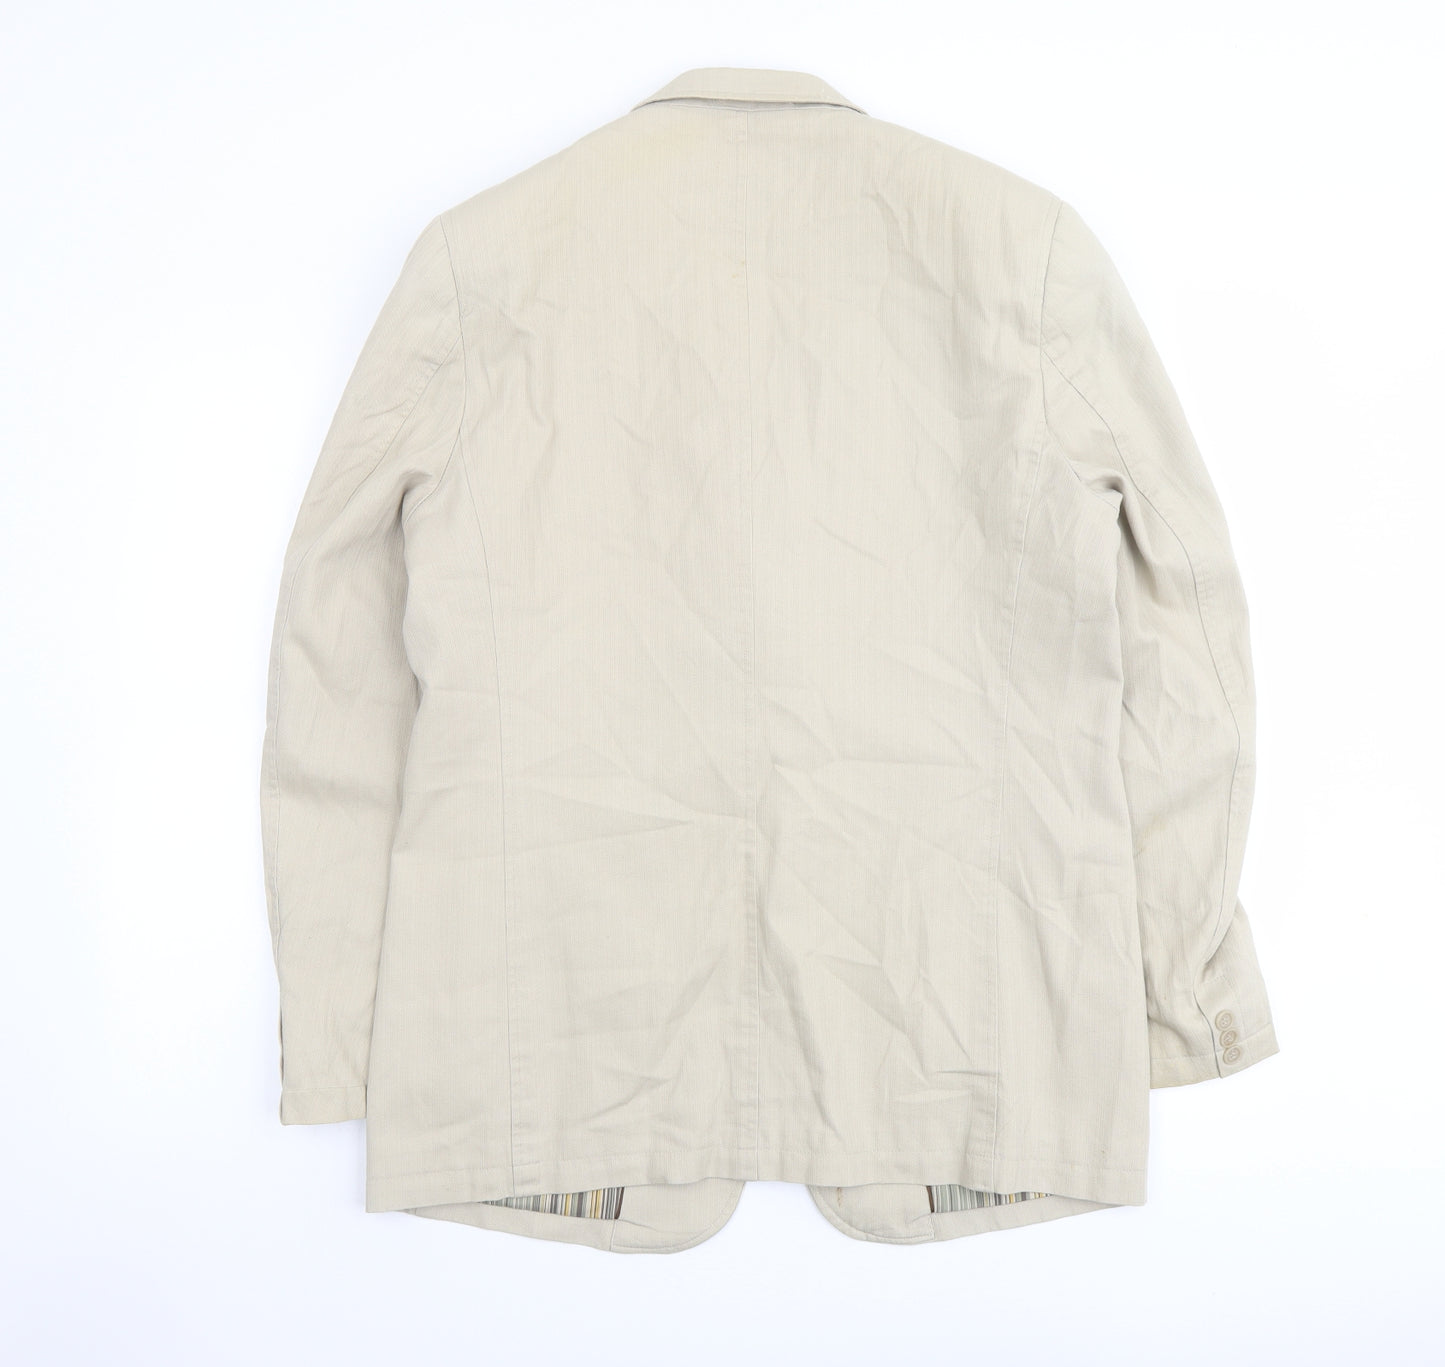 Lakeland Mens Beige Cotton Jacket Suit Jacket Size 38 Regular